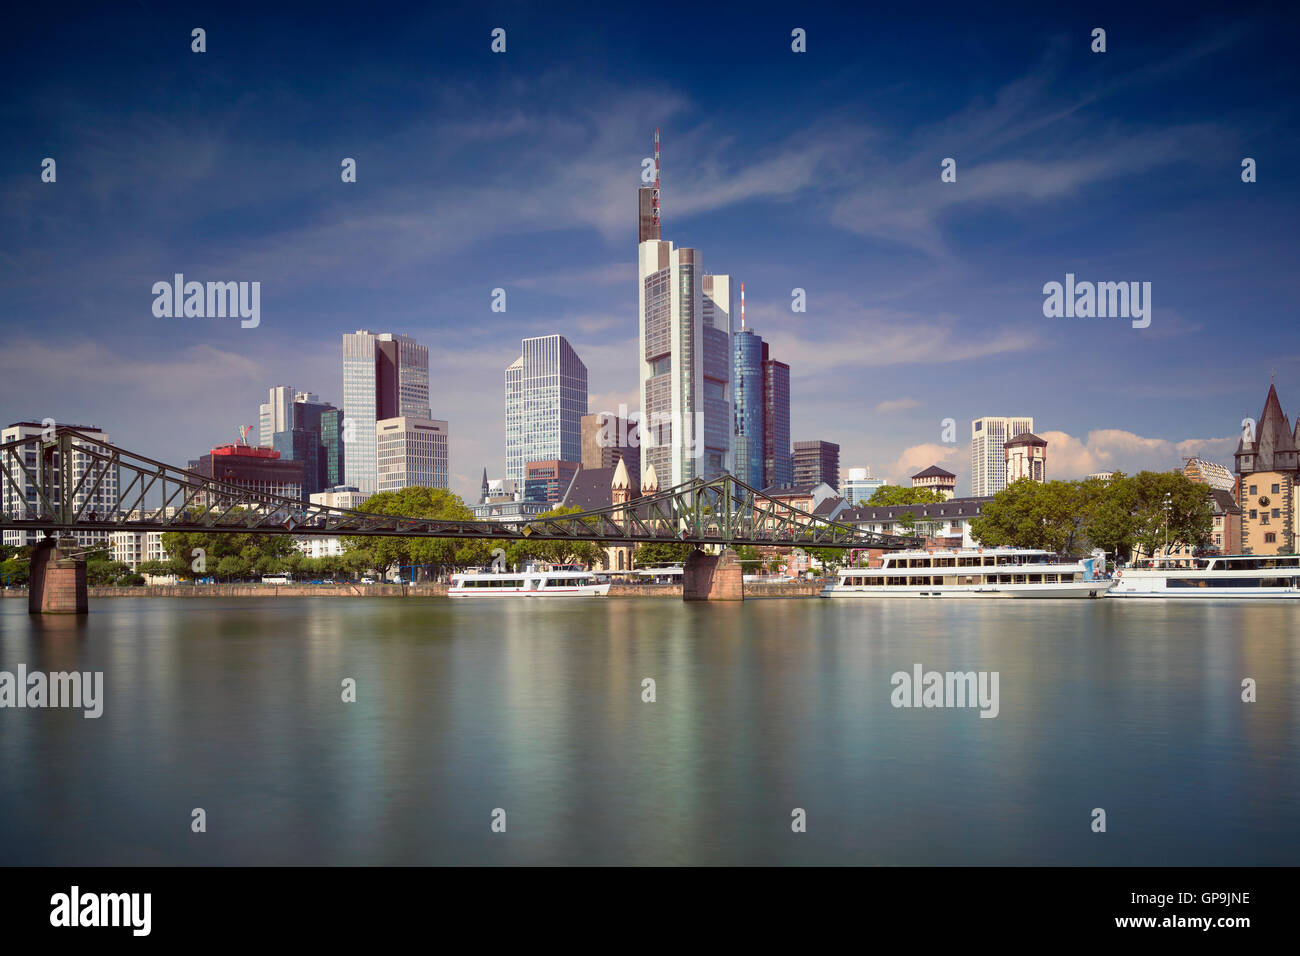 Frankfurt am Main. Image of Frankfurt skyline during sunny day. Stock Photo